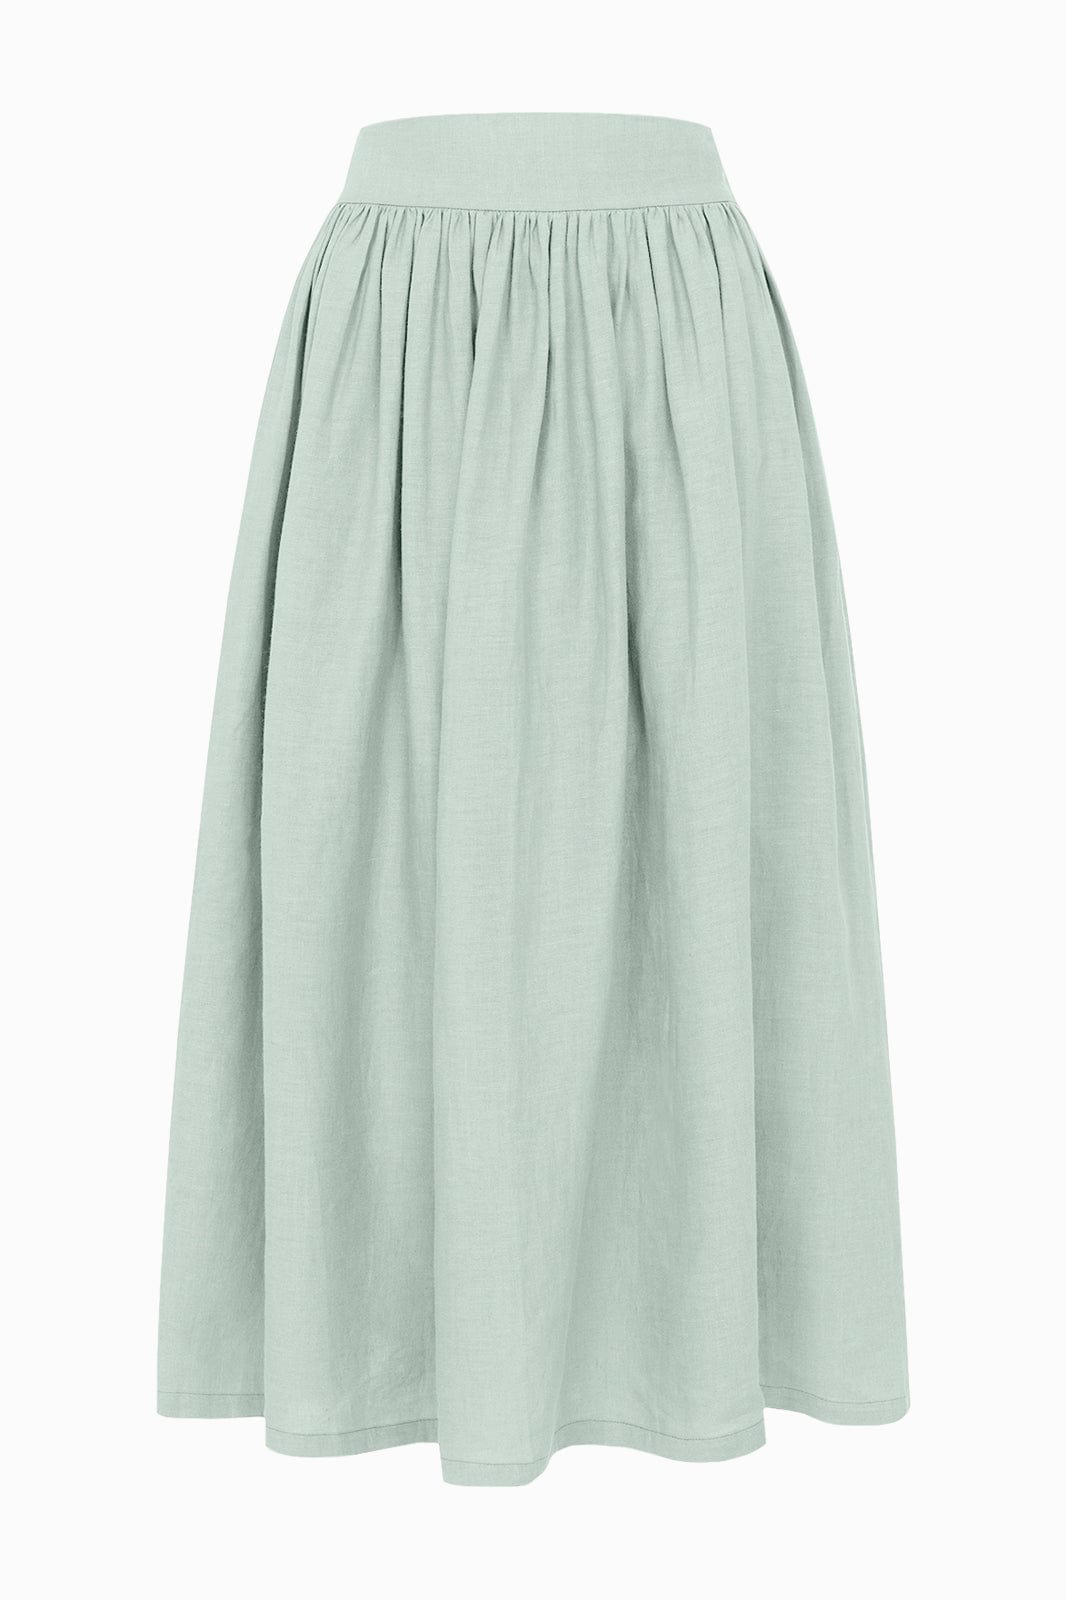 arkitaip Skirts The Paulina Midi Skirt in mint